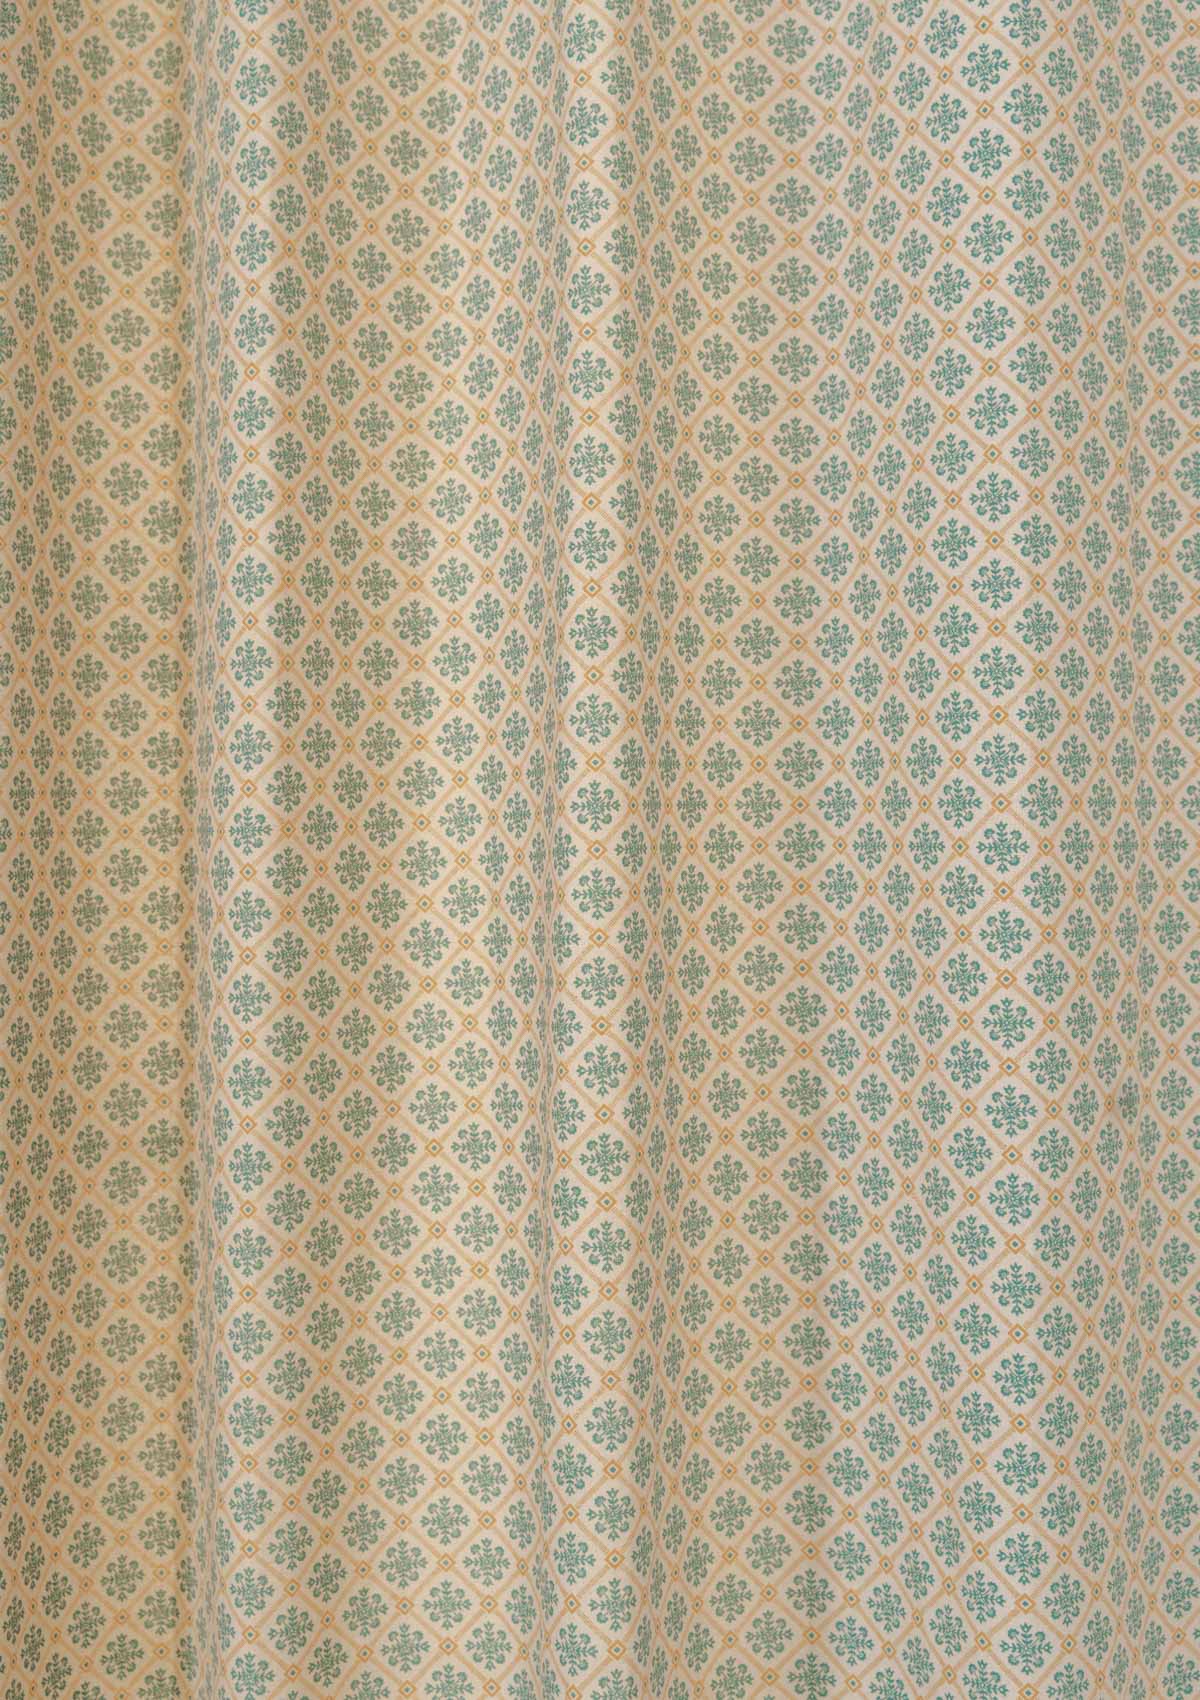 Yura 100% cotton geometric fabric for living room - Room darkening - Aqua blue